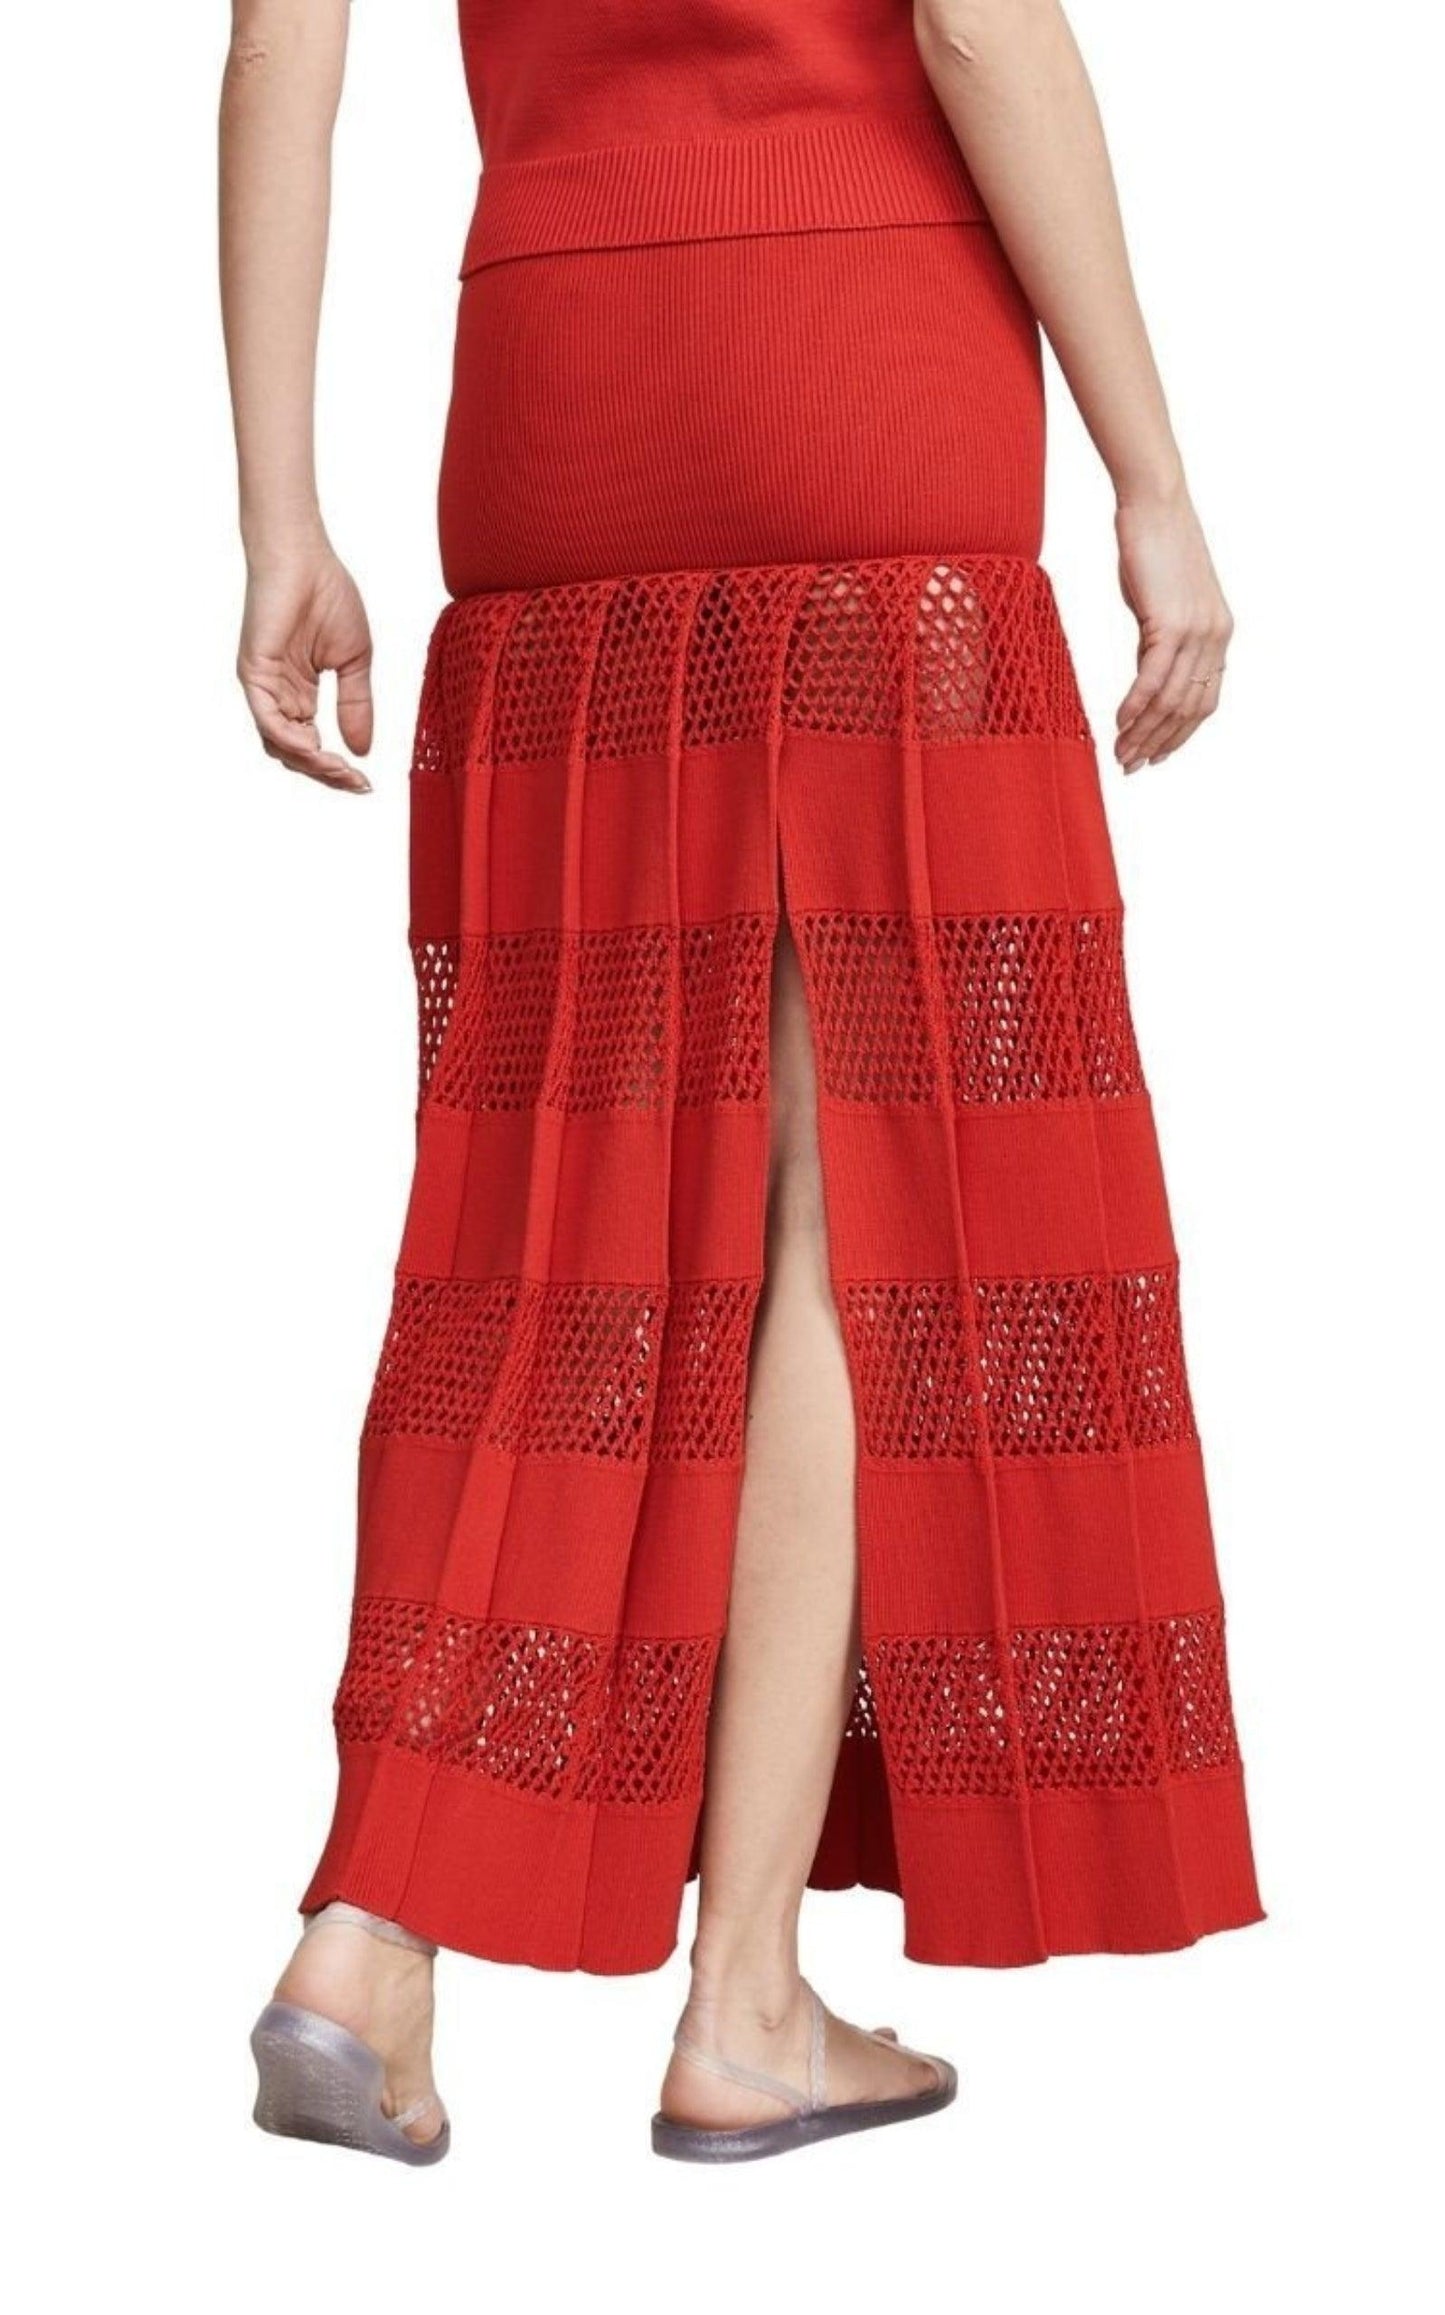  Sonia RykielTextured Stripe Skirt - Runway Catalog